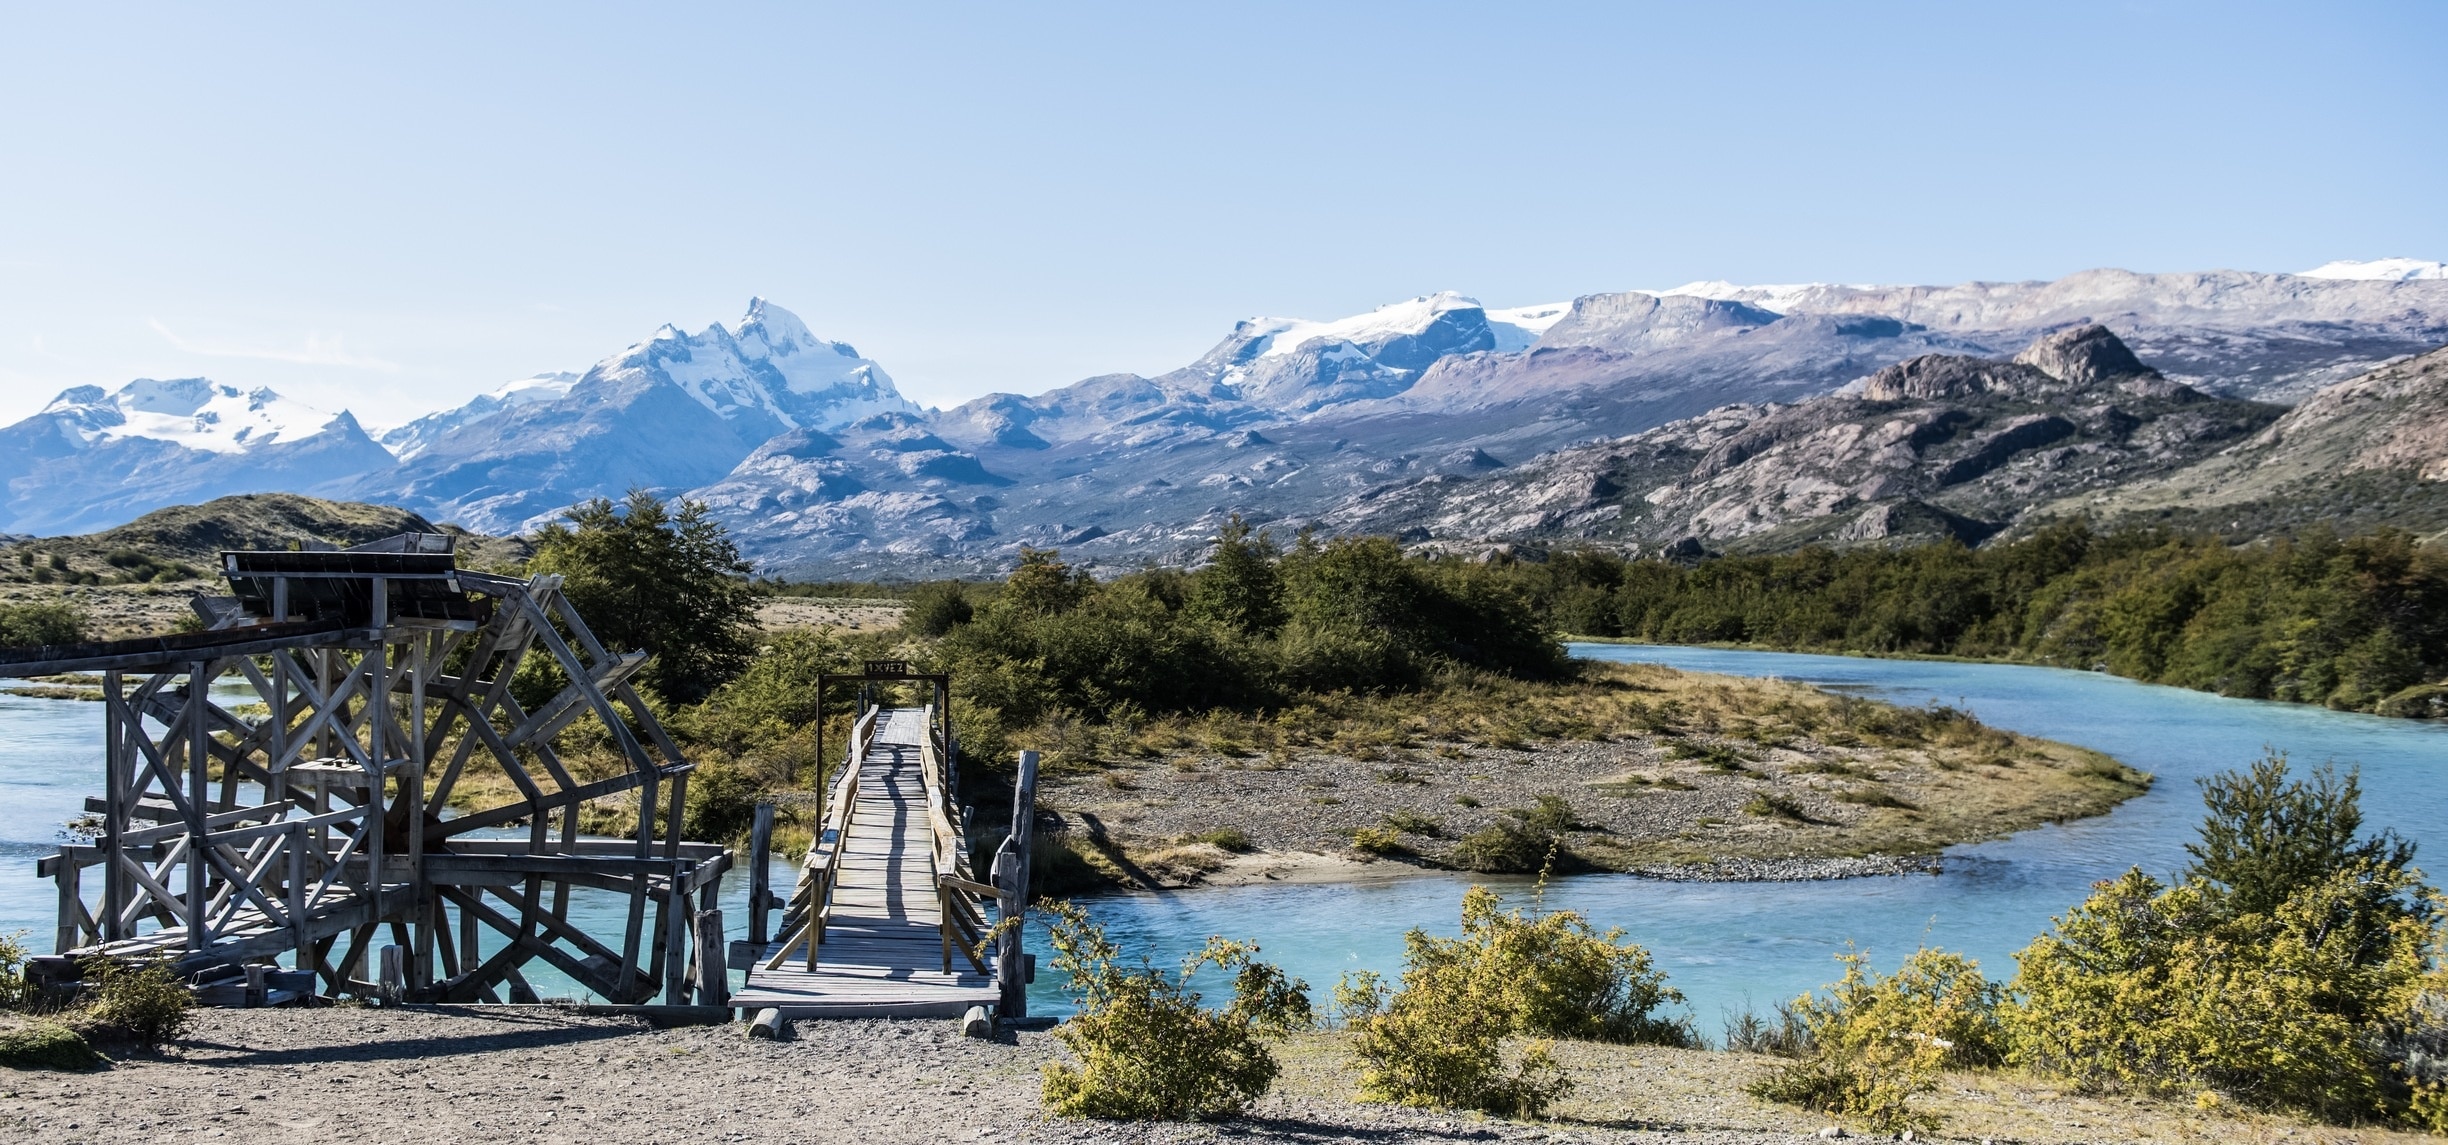 An old water mill at Estancia Cristina, Patagonia, Argentina. #patagoniadiaries